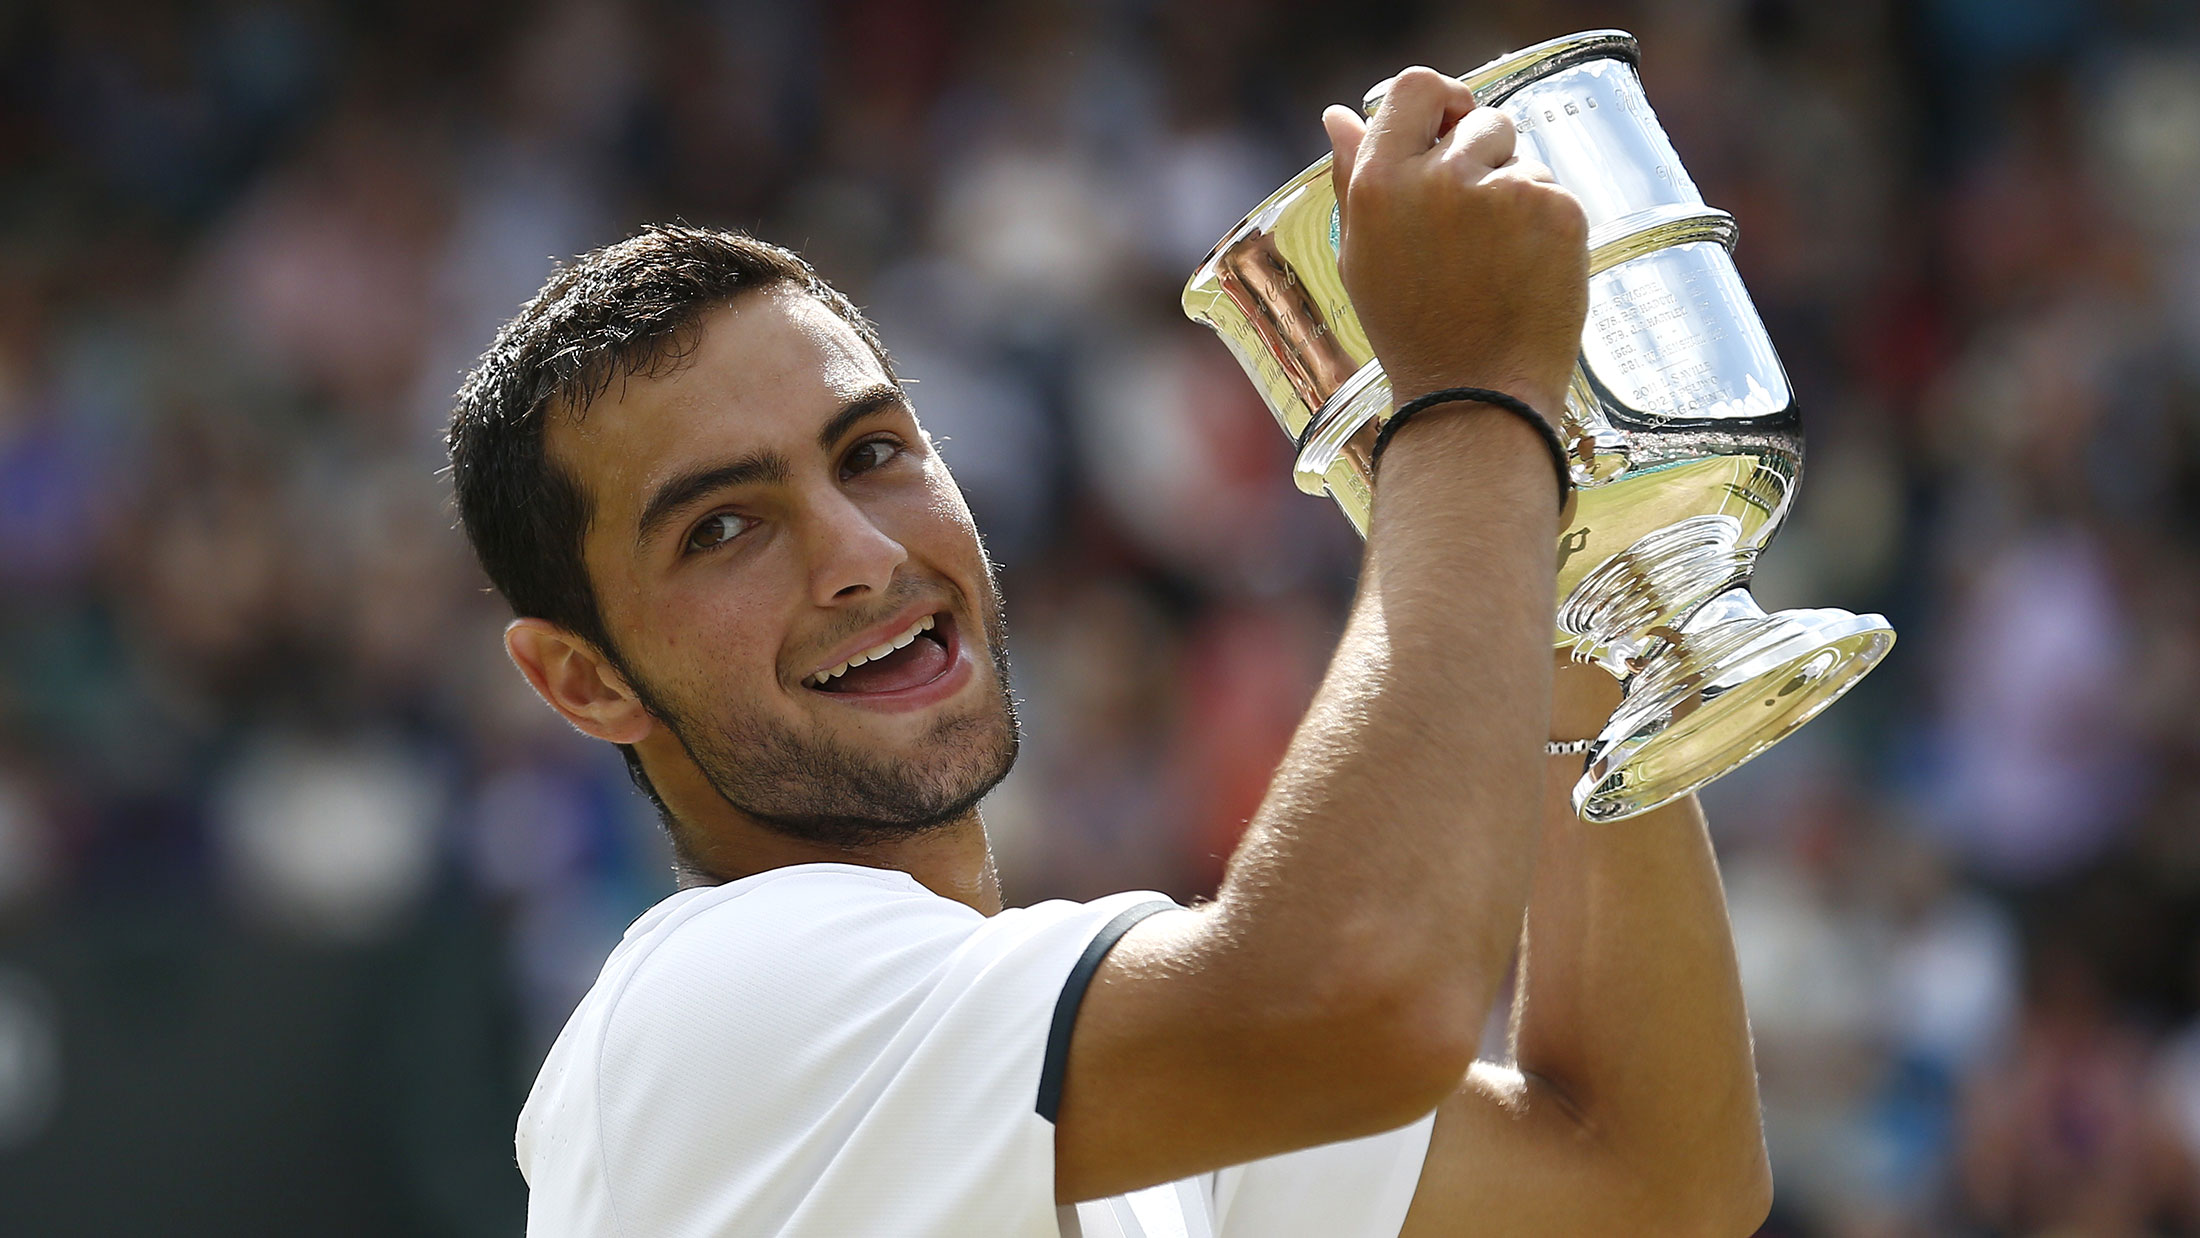 Noah Rubin raises his trophy after winning the boys’ singles final match at Wimbledon last year.
